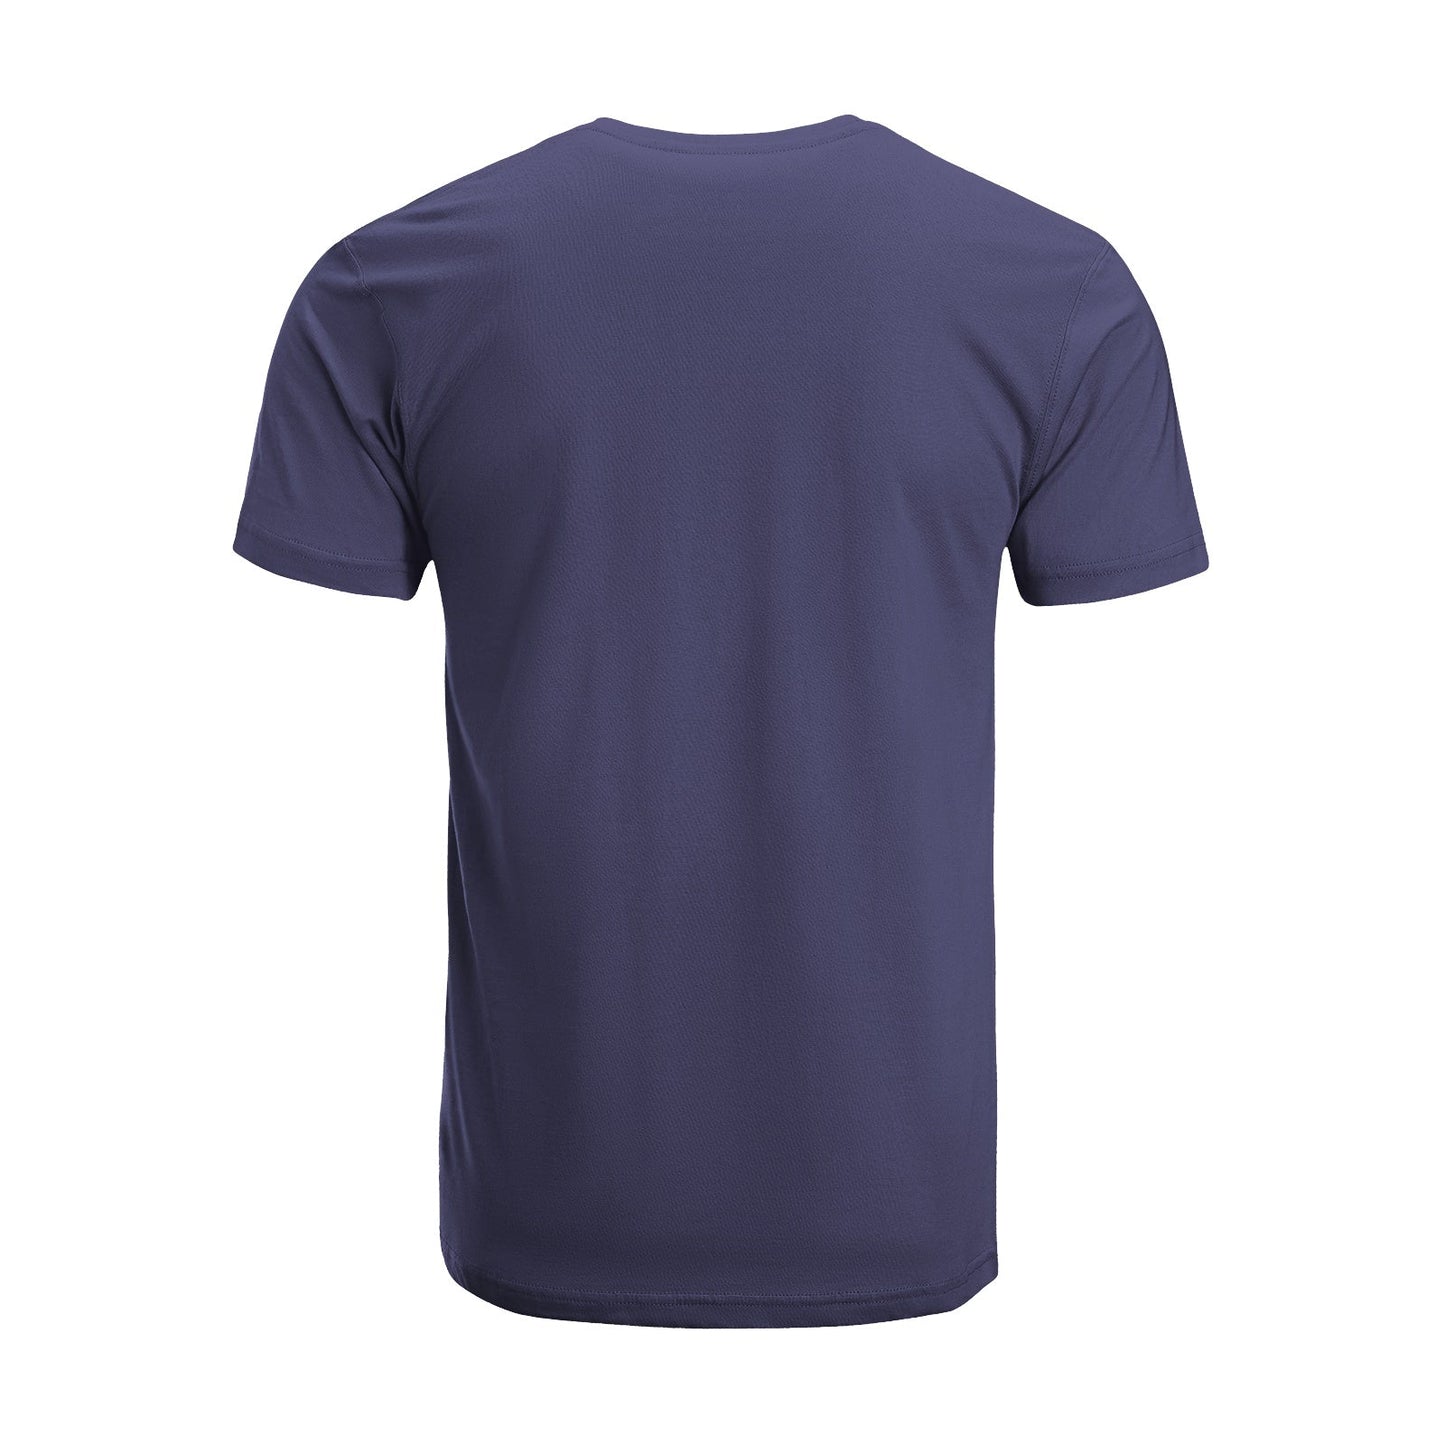 Unisex Short Sleeve Crew Neck Cotton Jersey T-Shirt VEGAN 18